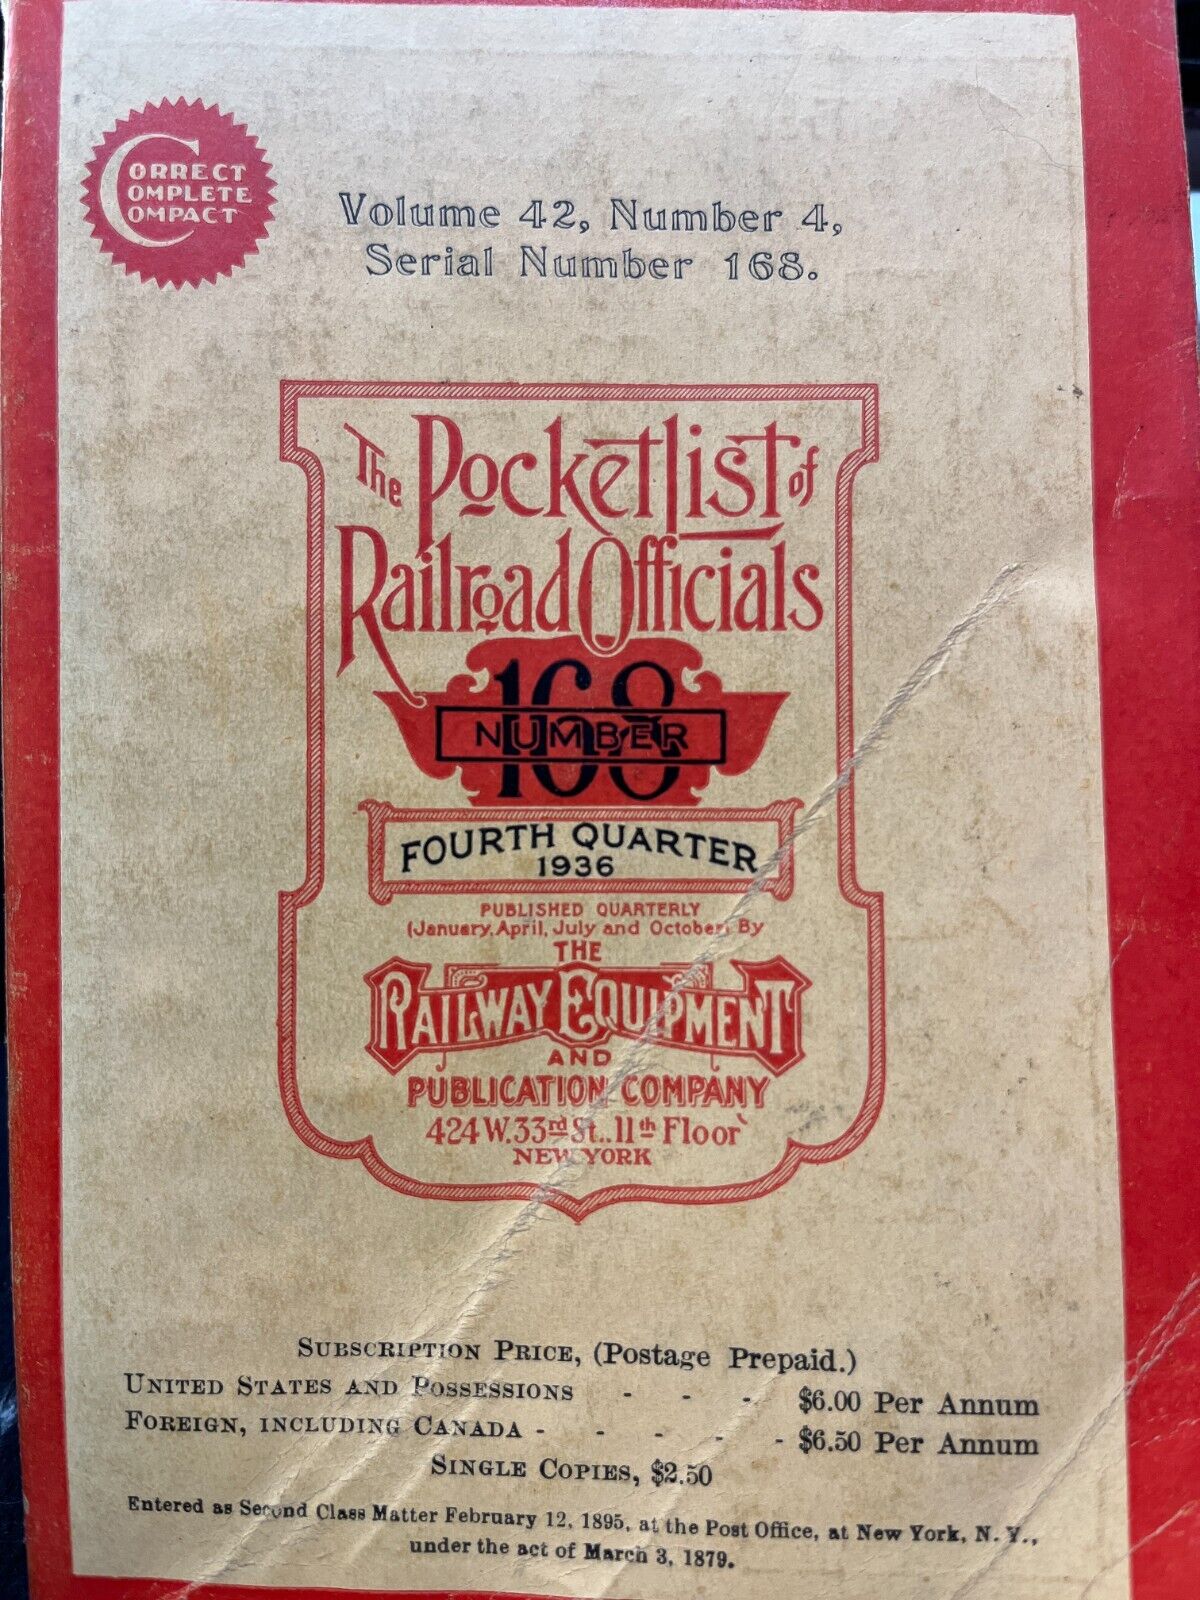 The Pocket List of Railroad Officials Number 168 1936 Vol. 42 Number 4